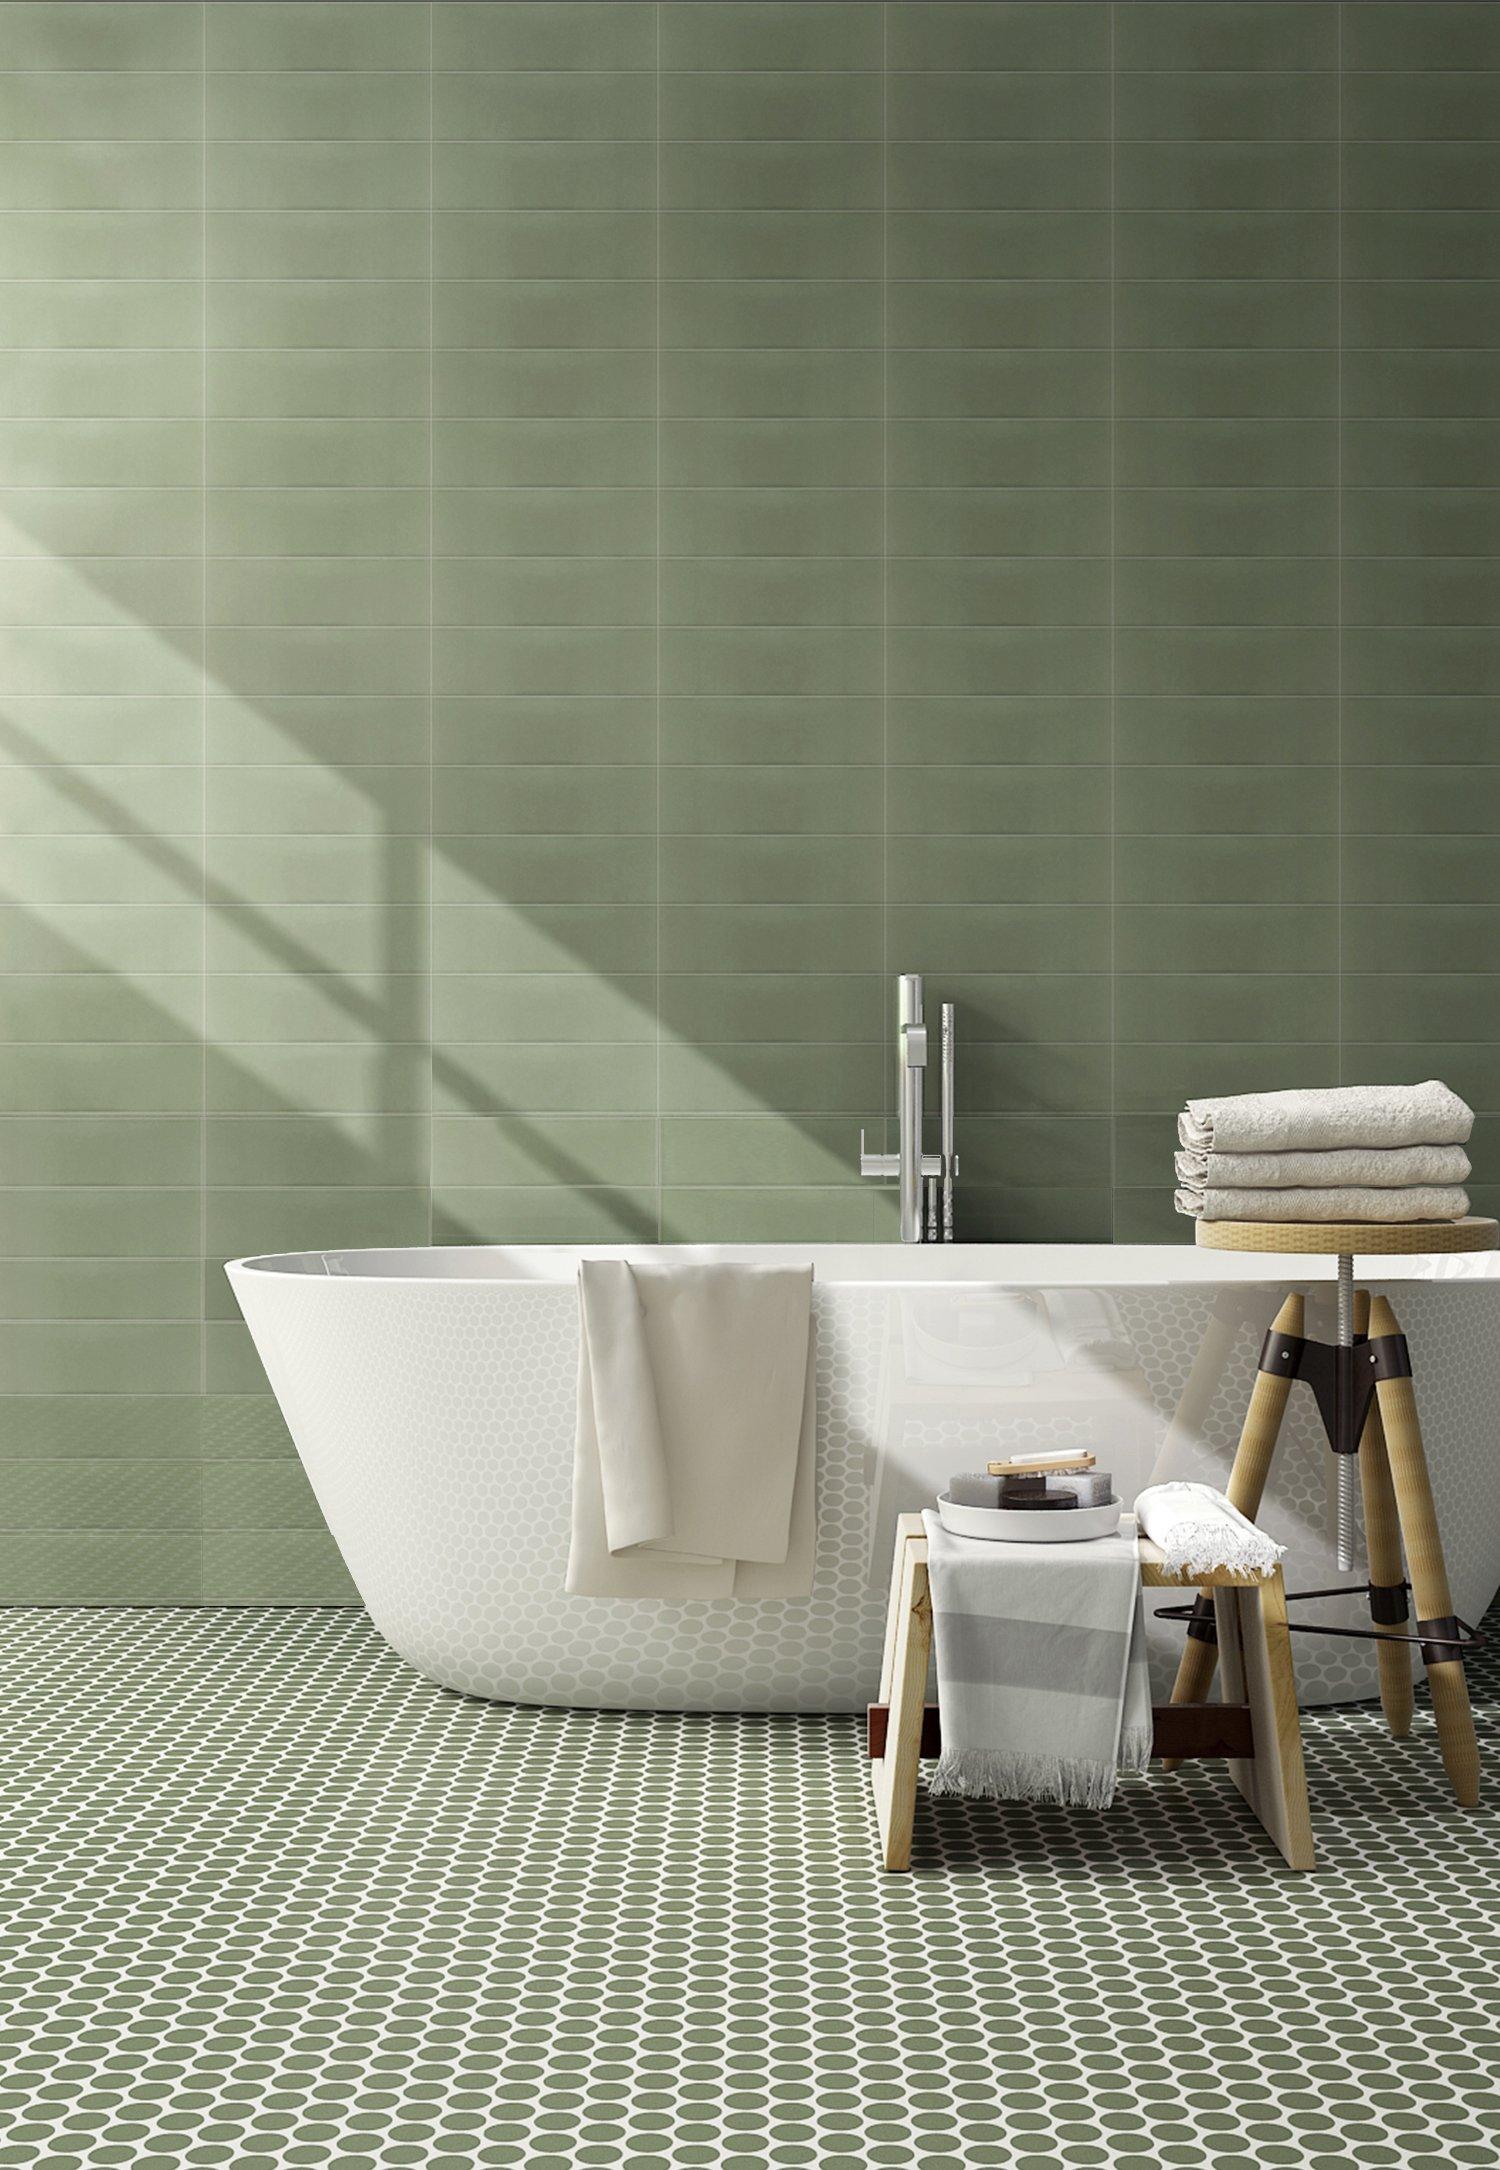 Olive Iii Polished Ceramic Wall Tile, Olive Green Bathroom Floor Tiles